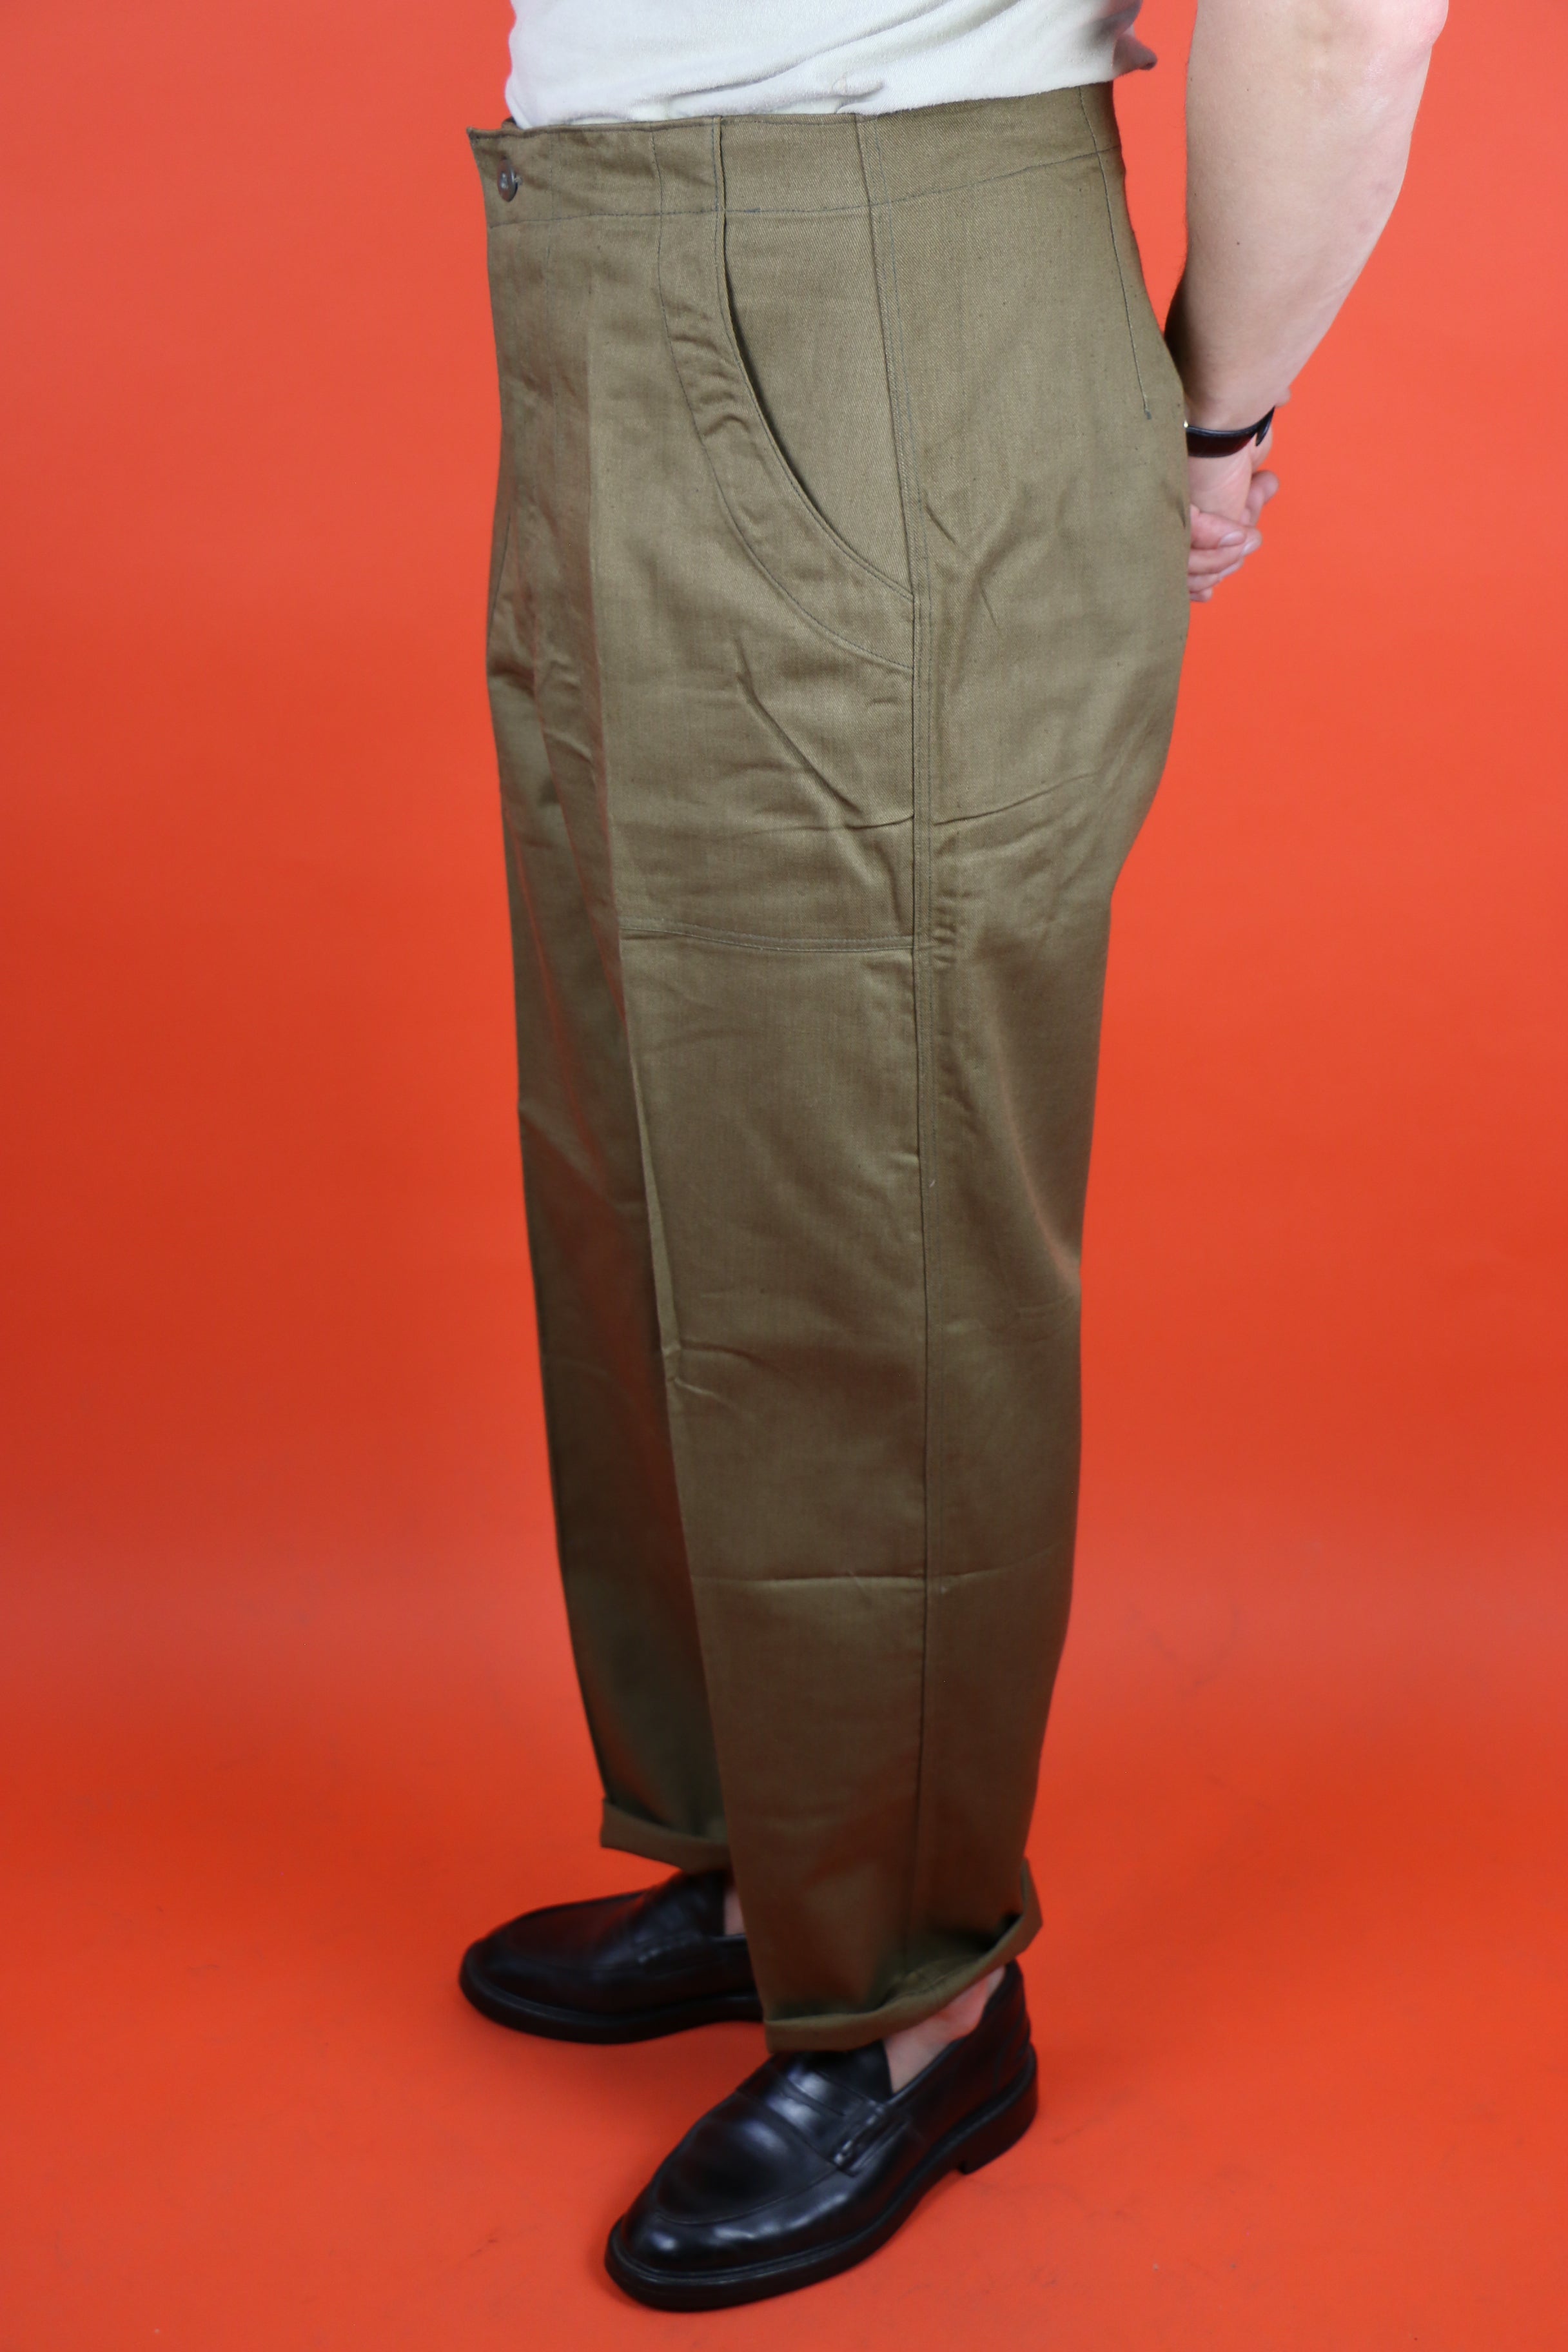 Czech Army Pants ~ Vintage Store Clochard92.com